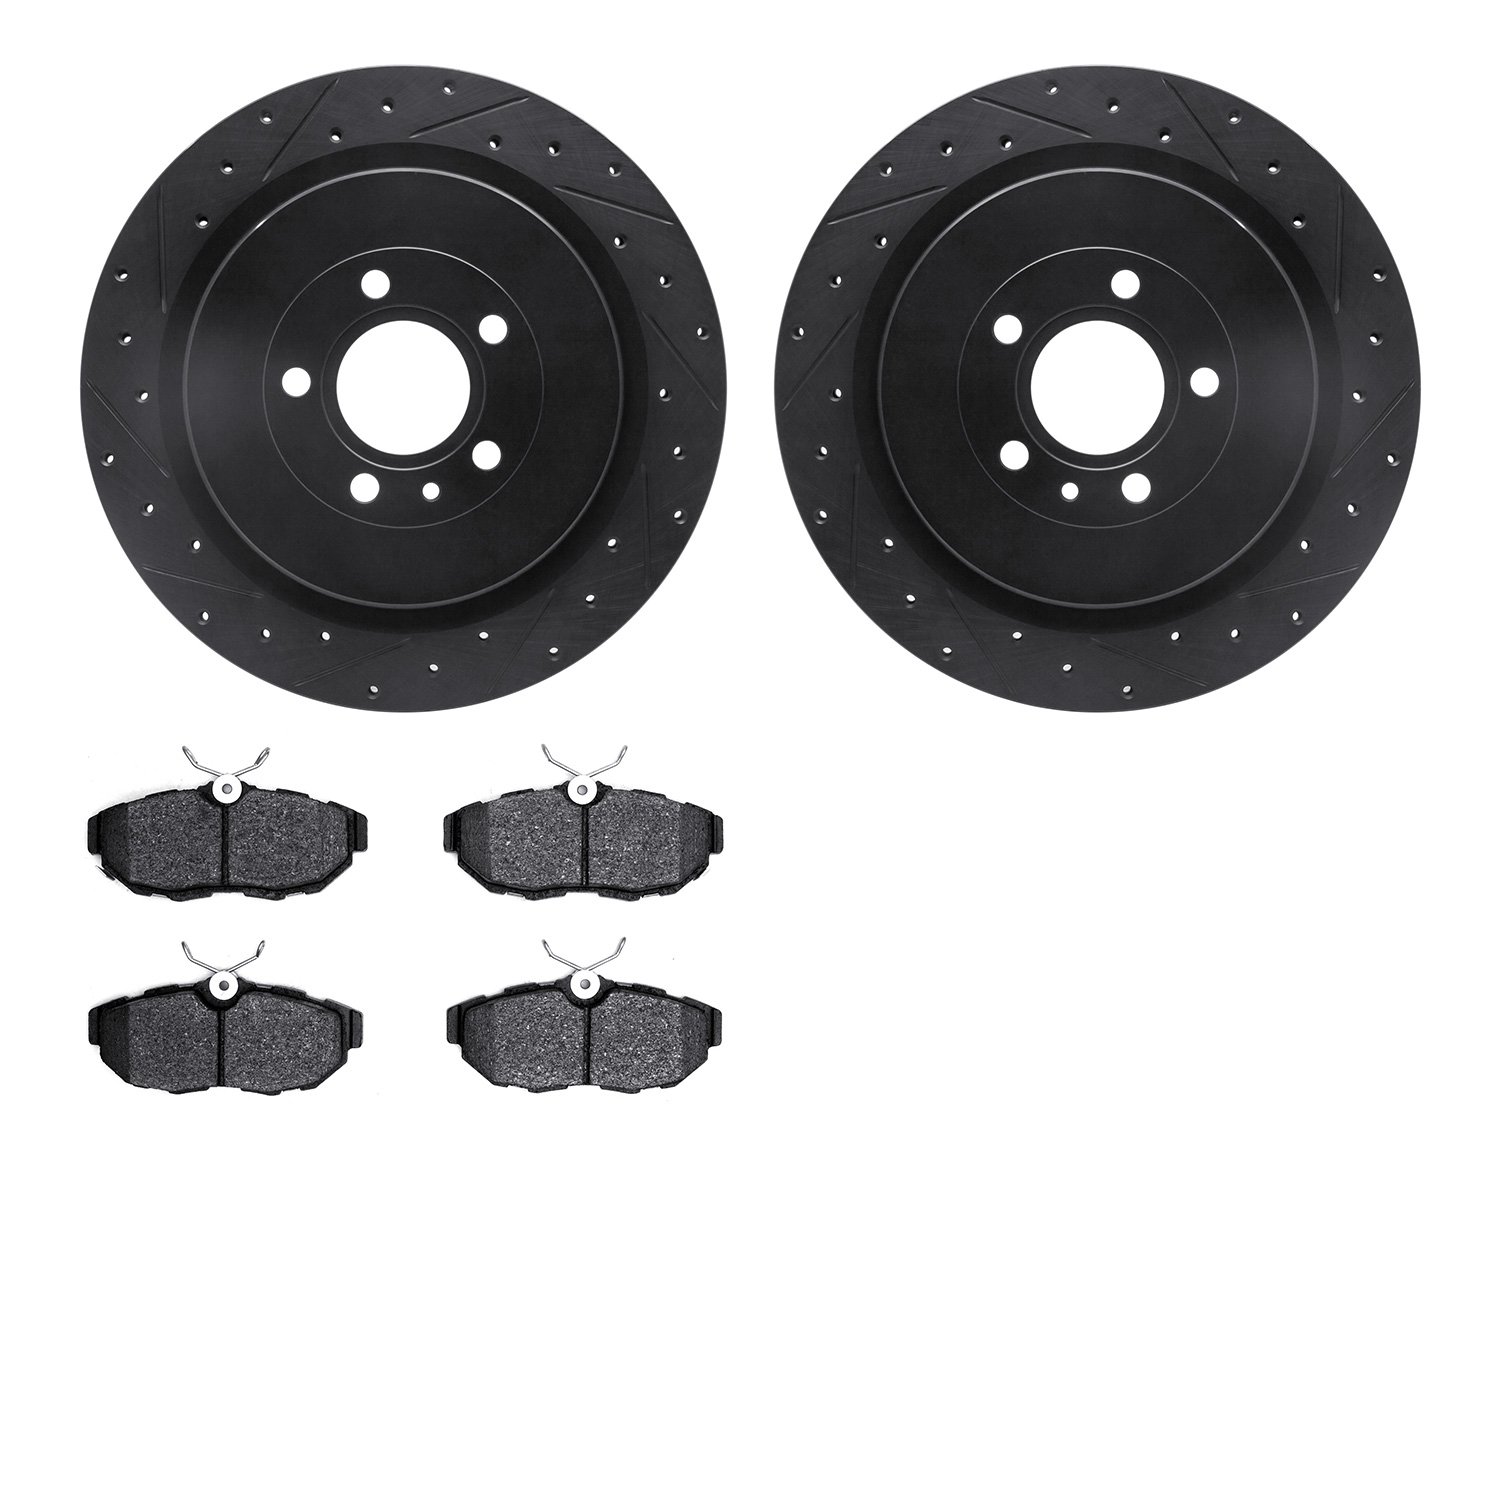 8302-54202 Drilled/Slotted Brake Rotors with 3000-Series Ceramic Brake Pads Kit [Black], 2013-2014 Ford/Lincoln/Mercury/Mazda, P